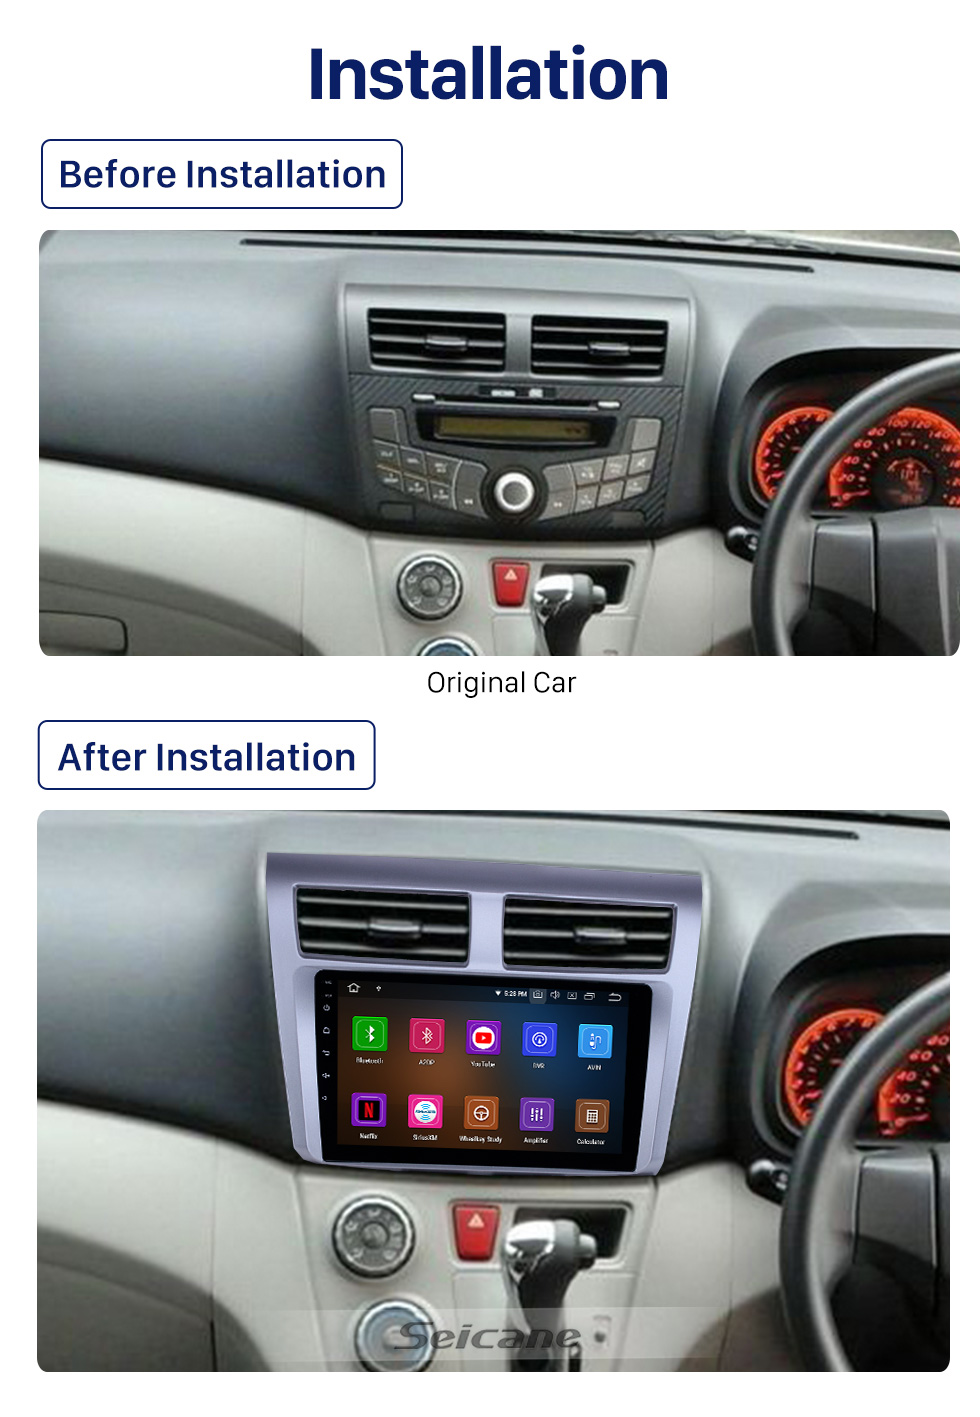 Seicane 9 Inch HD Touchscreen for 2012-2014 PROTON MYVI Autoradio Car DVD Player Upgrade Support Steering Wheel Control